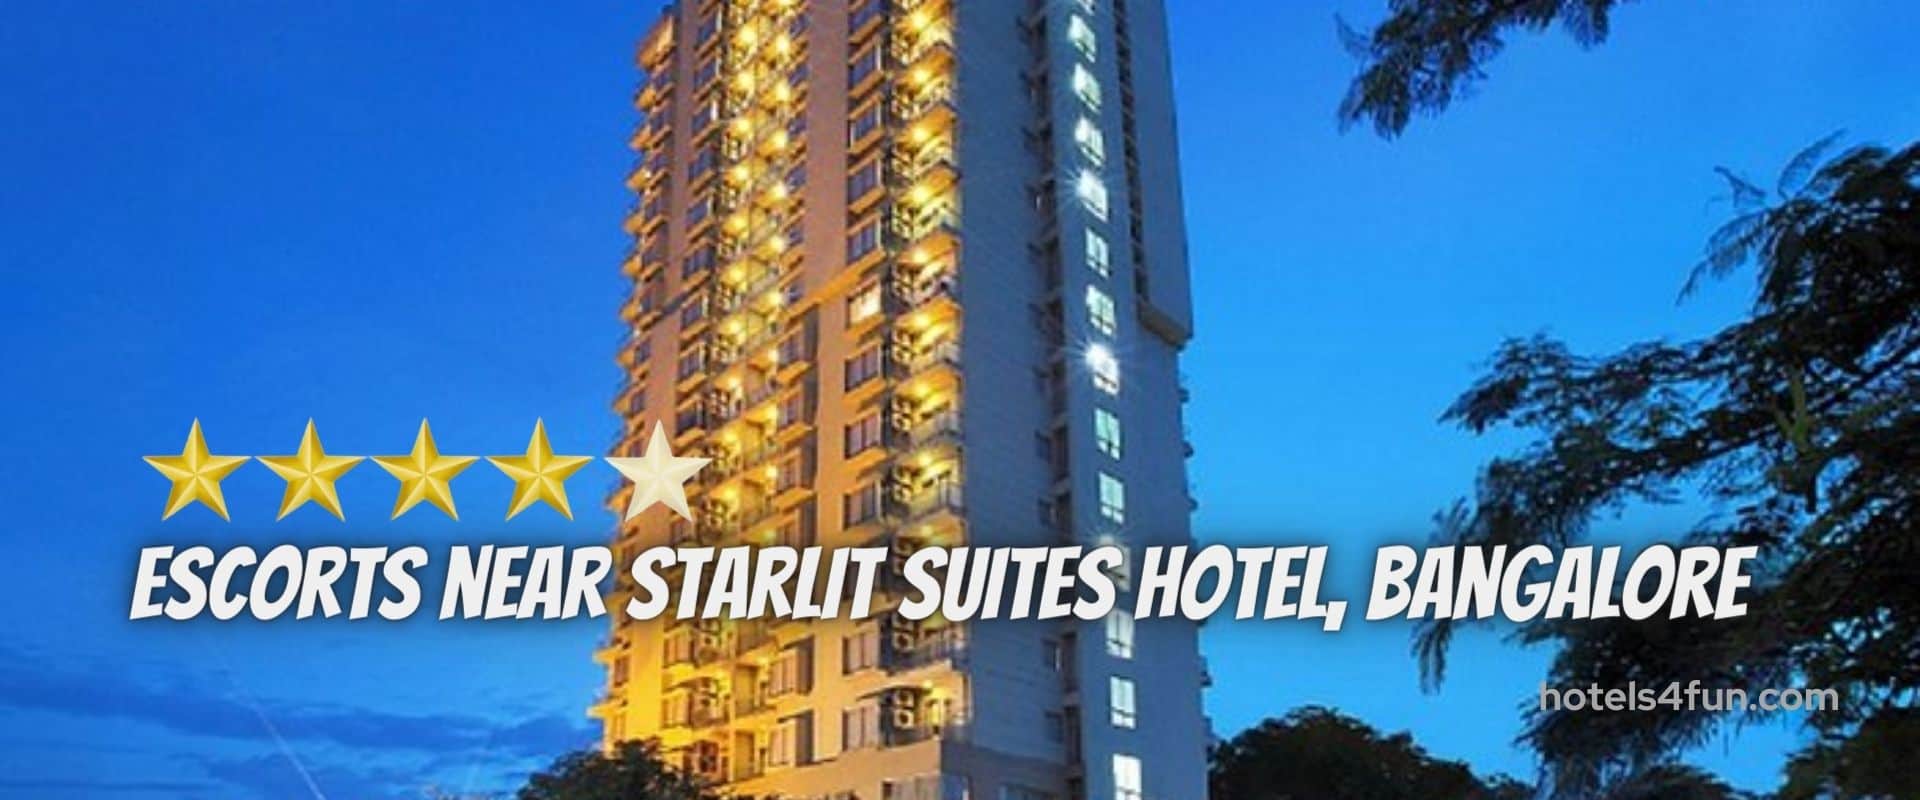 escorts-near-starlit-suites-hotel-bangalore Hotel Escorts